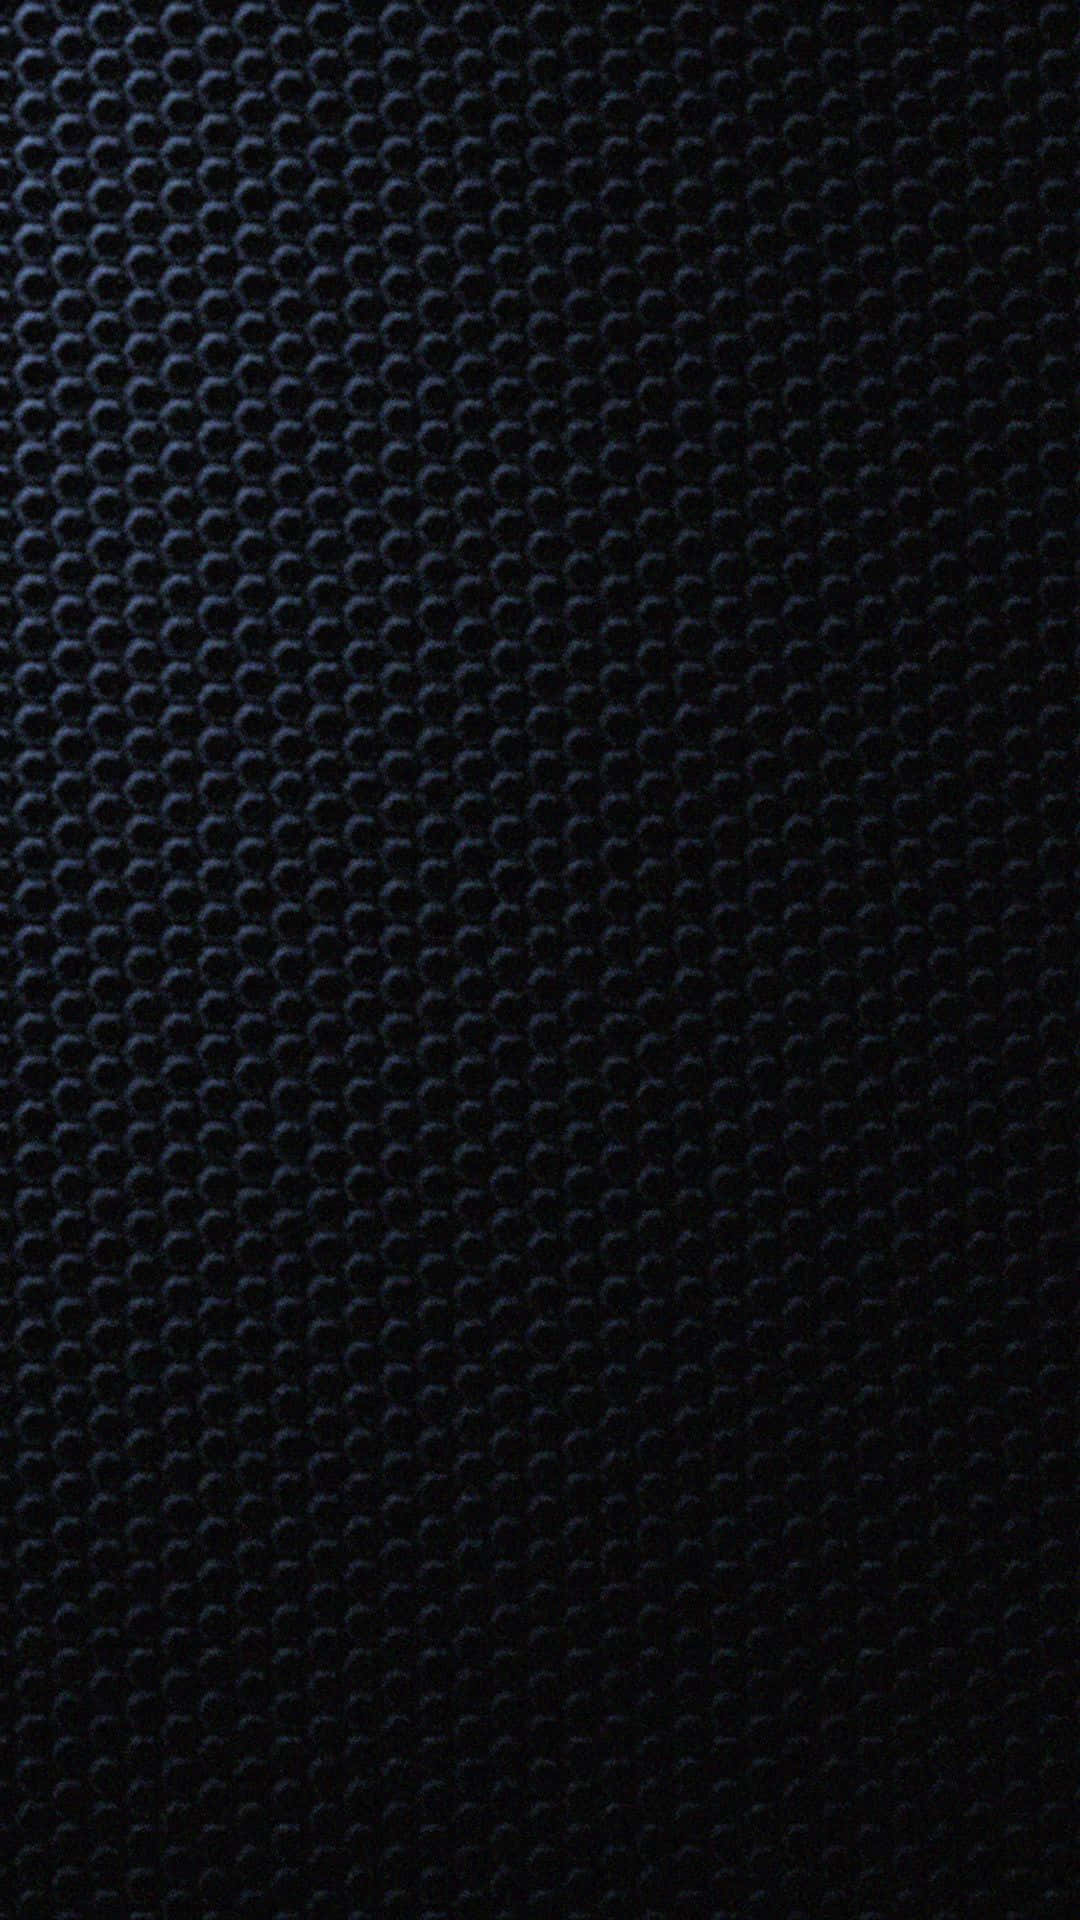 Galaxy S5 Carbon Black Mesh Background